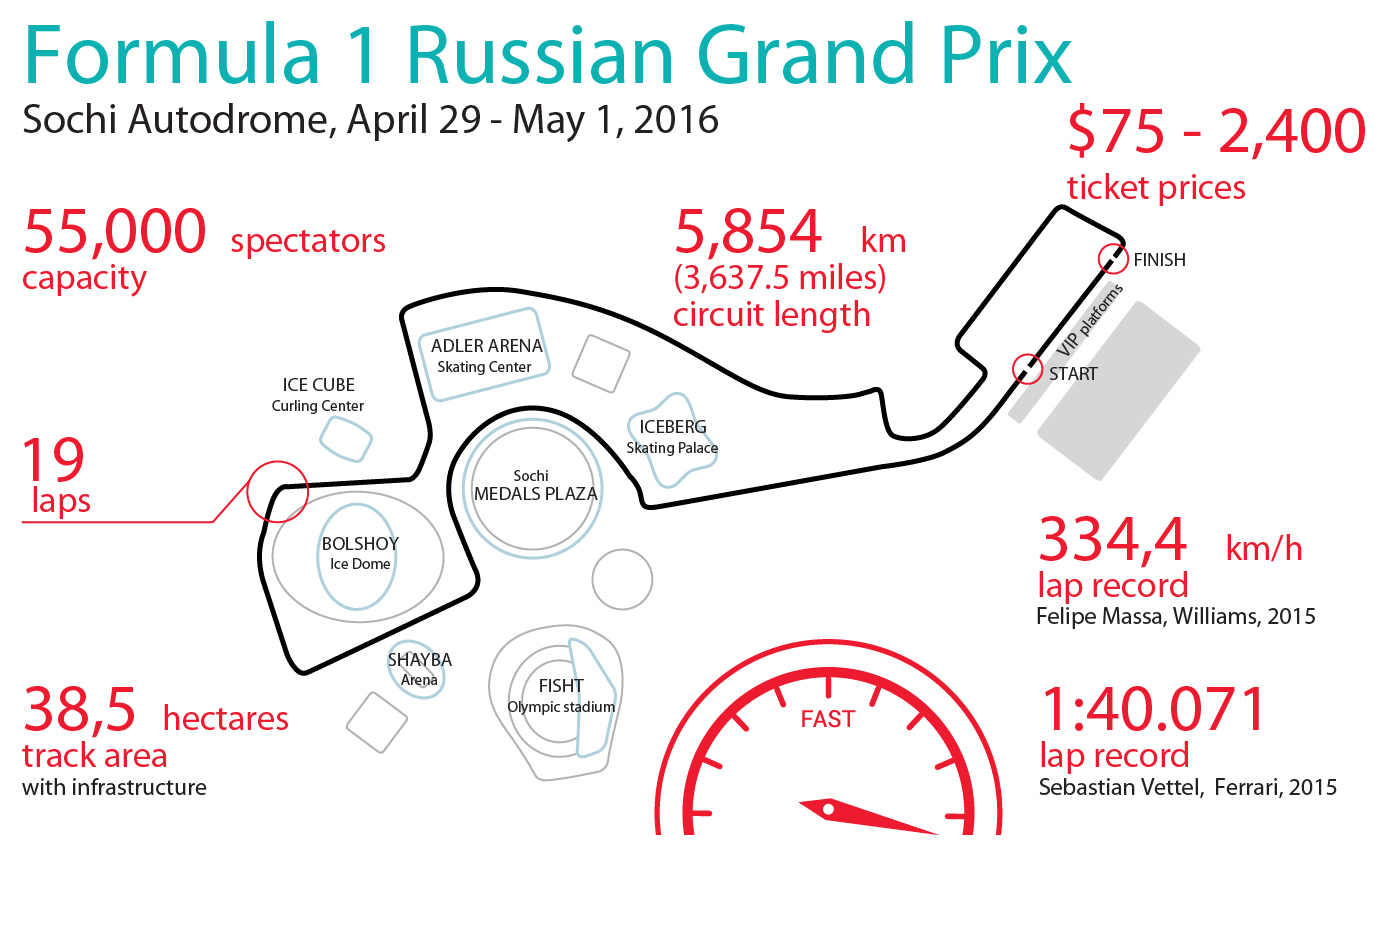 Formula 1 Russian Grand Prix in numbers